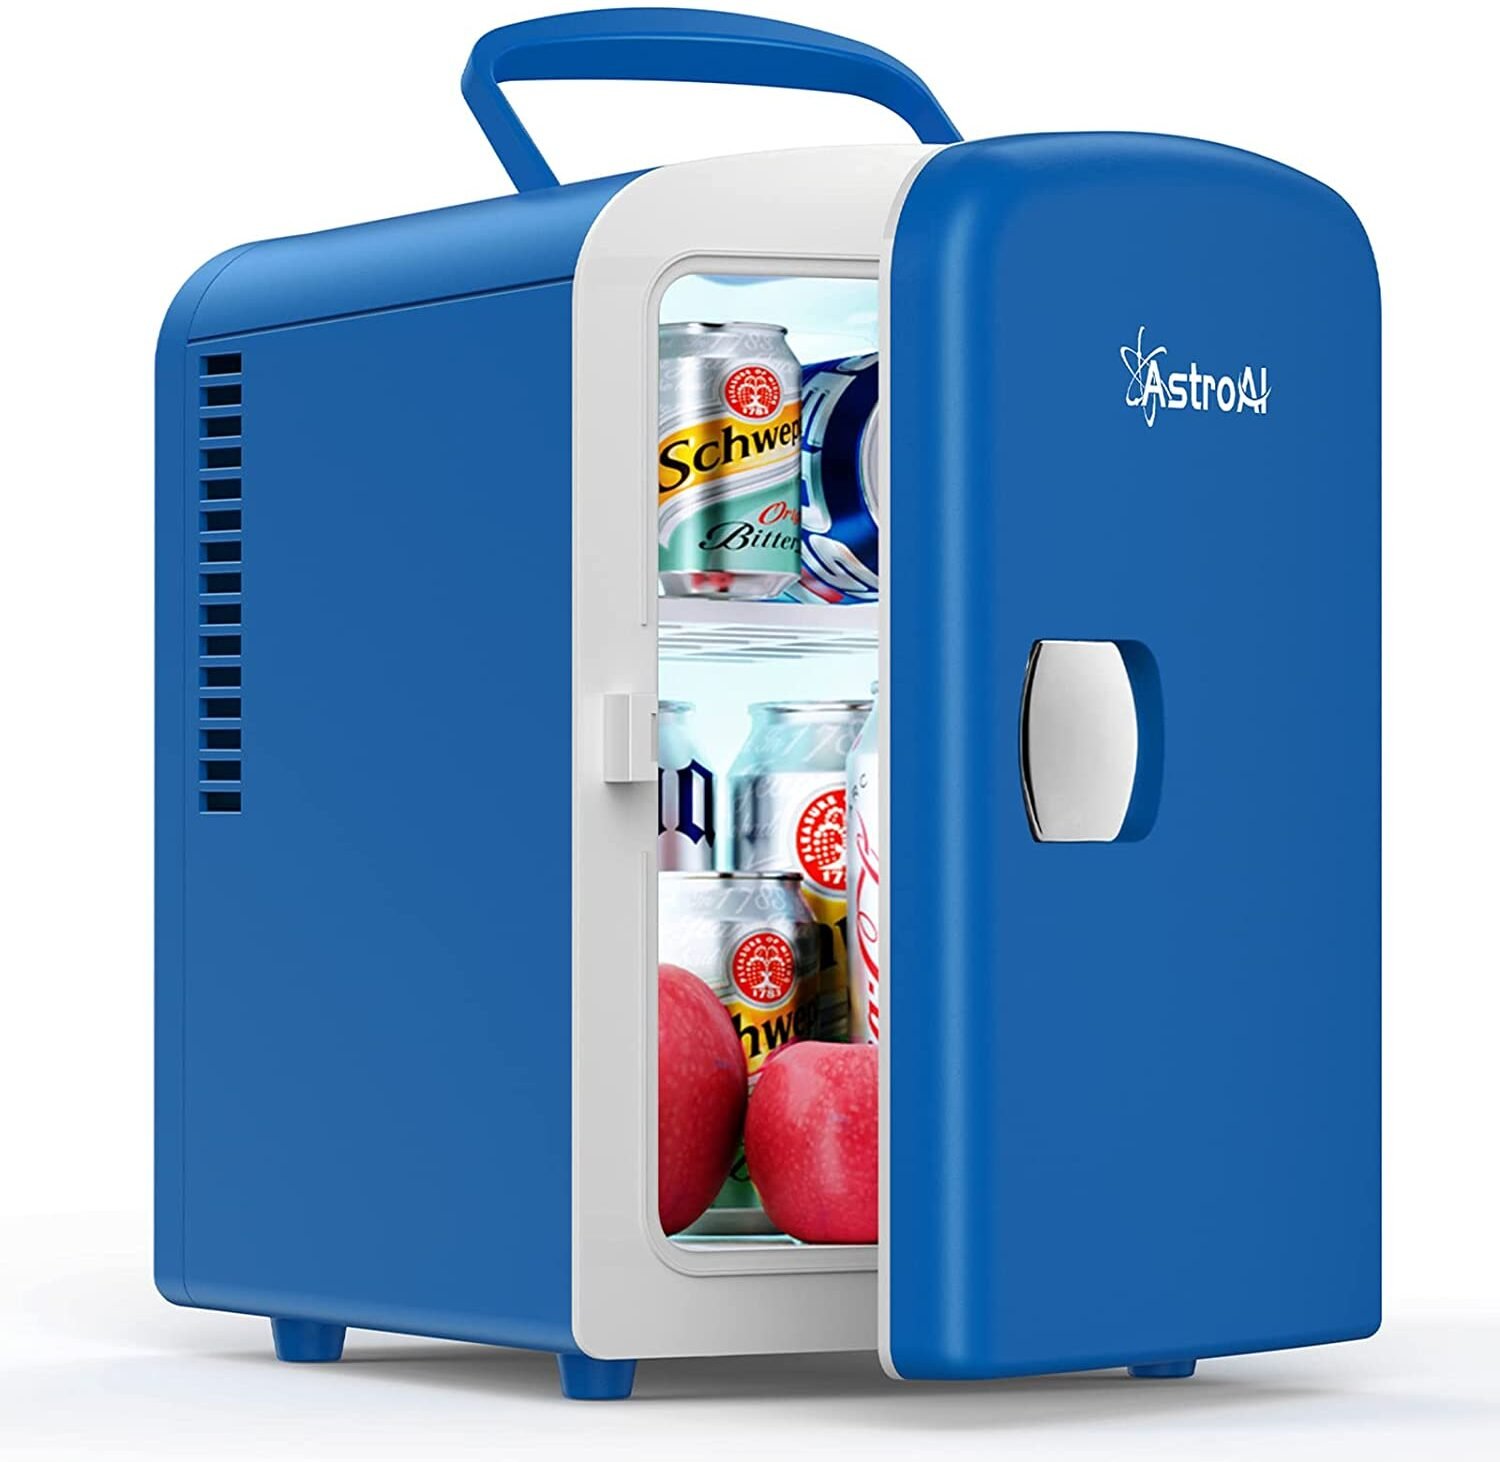 AstroAI 4L Mini Refrigerator (Blue)